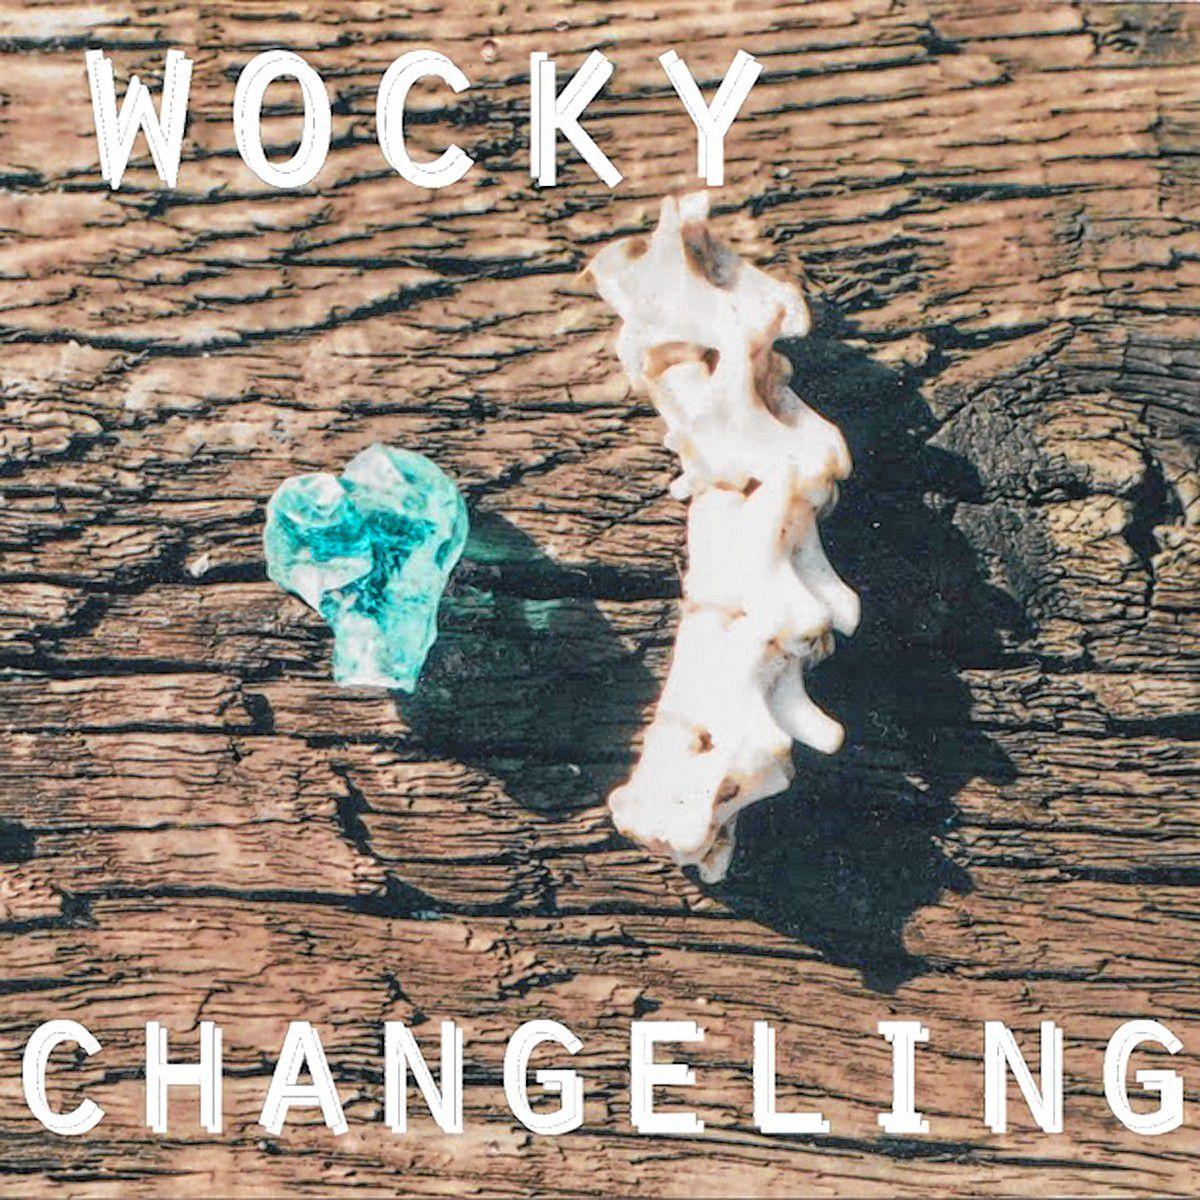 Basemental: Wocky’s new album, reviewed